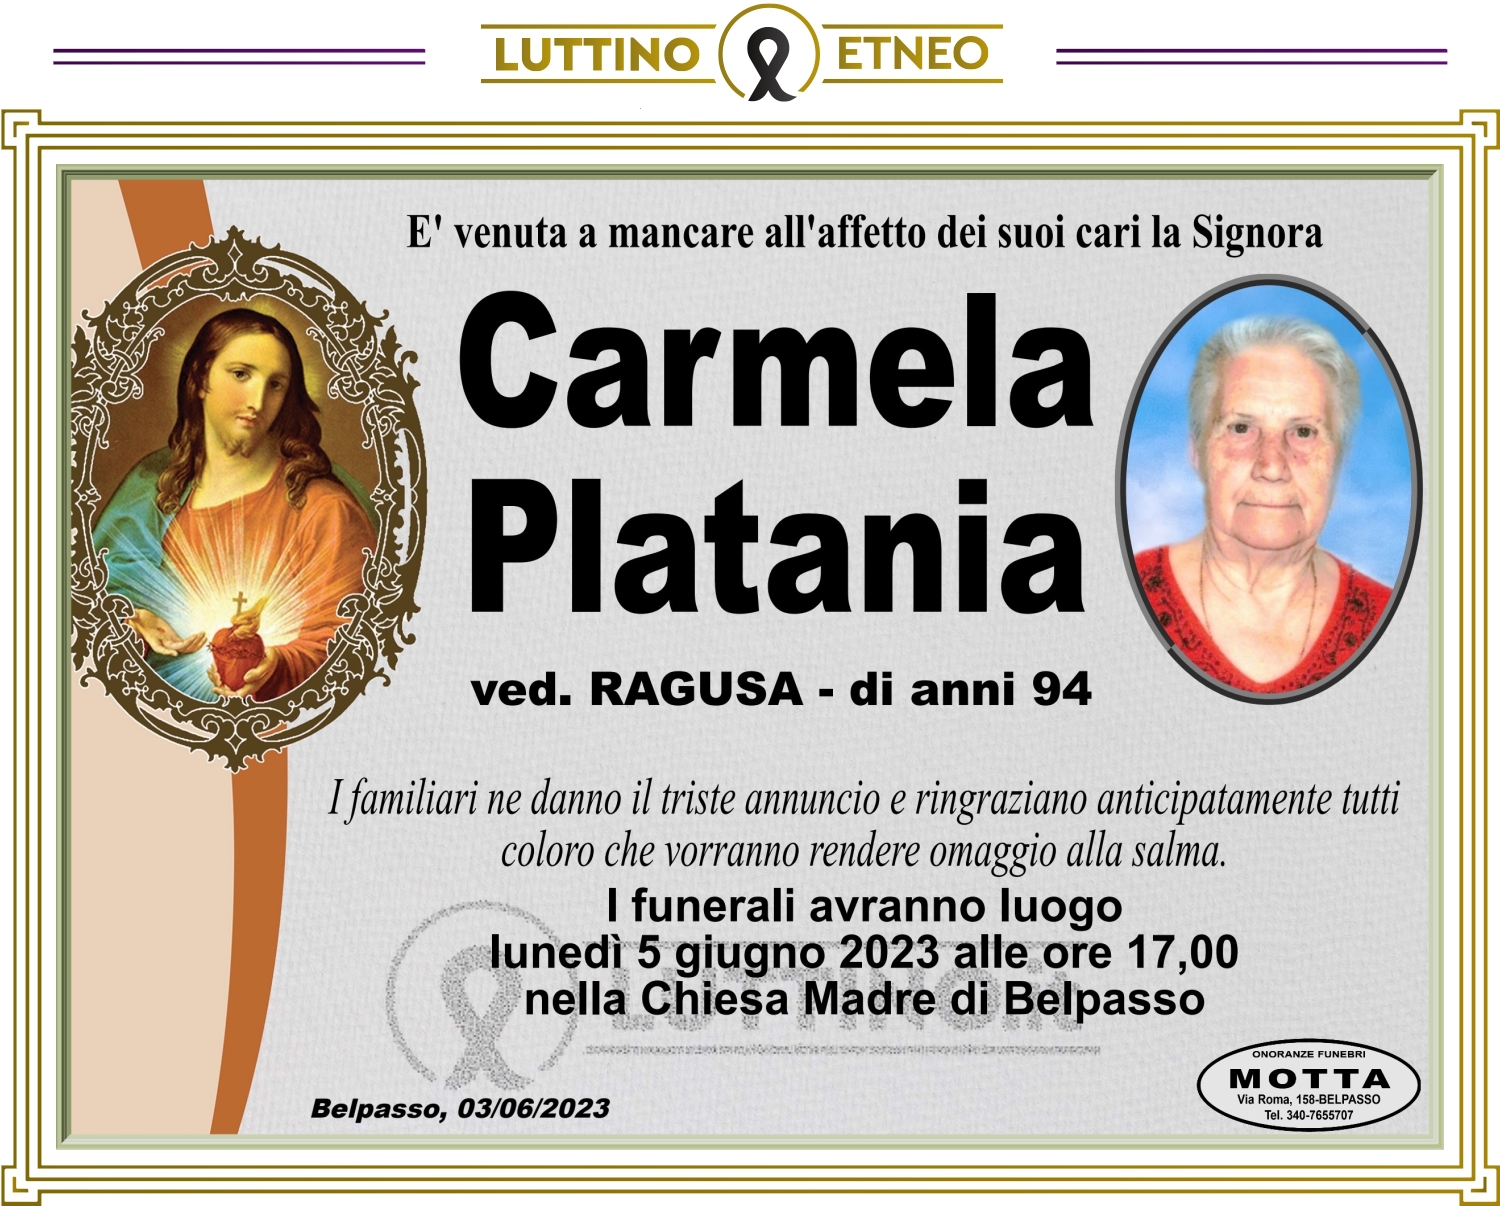 Carmela Platania